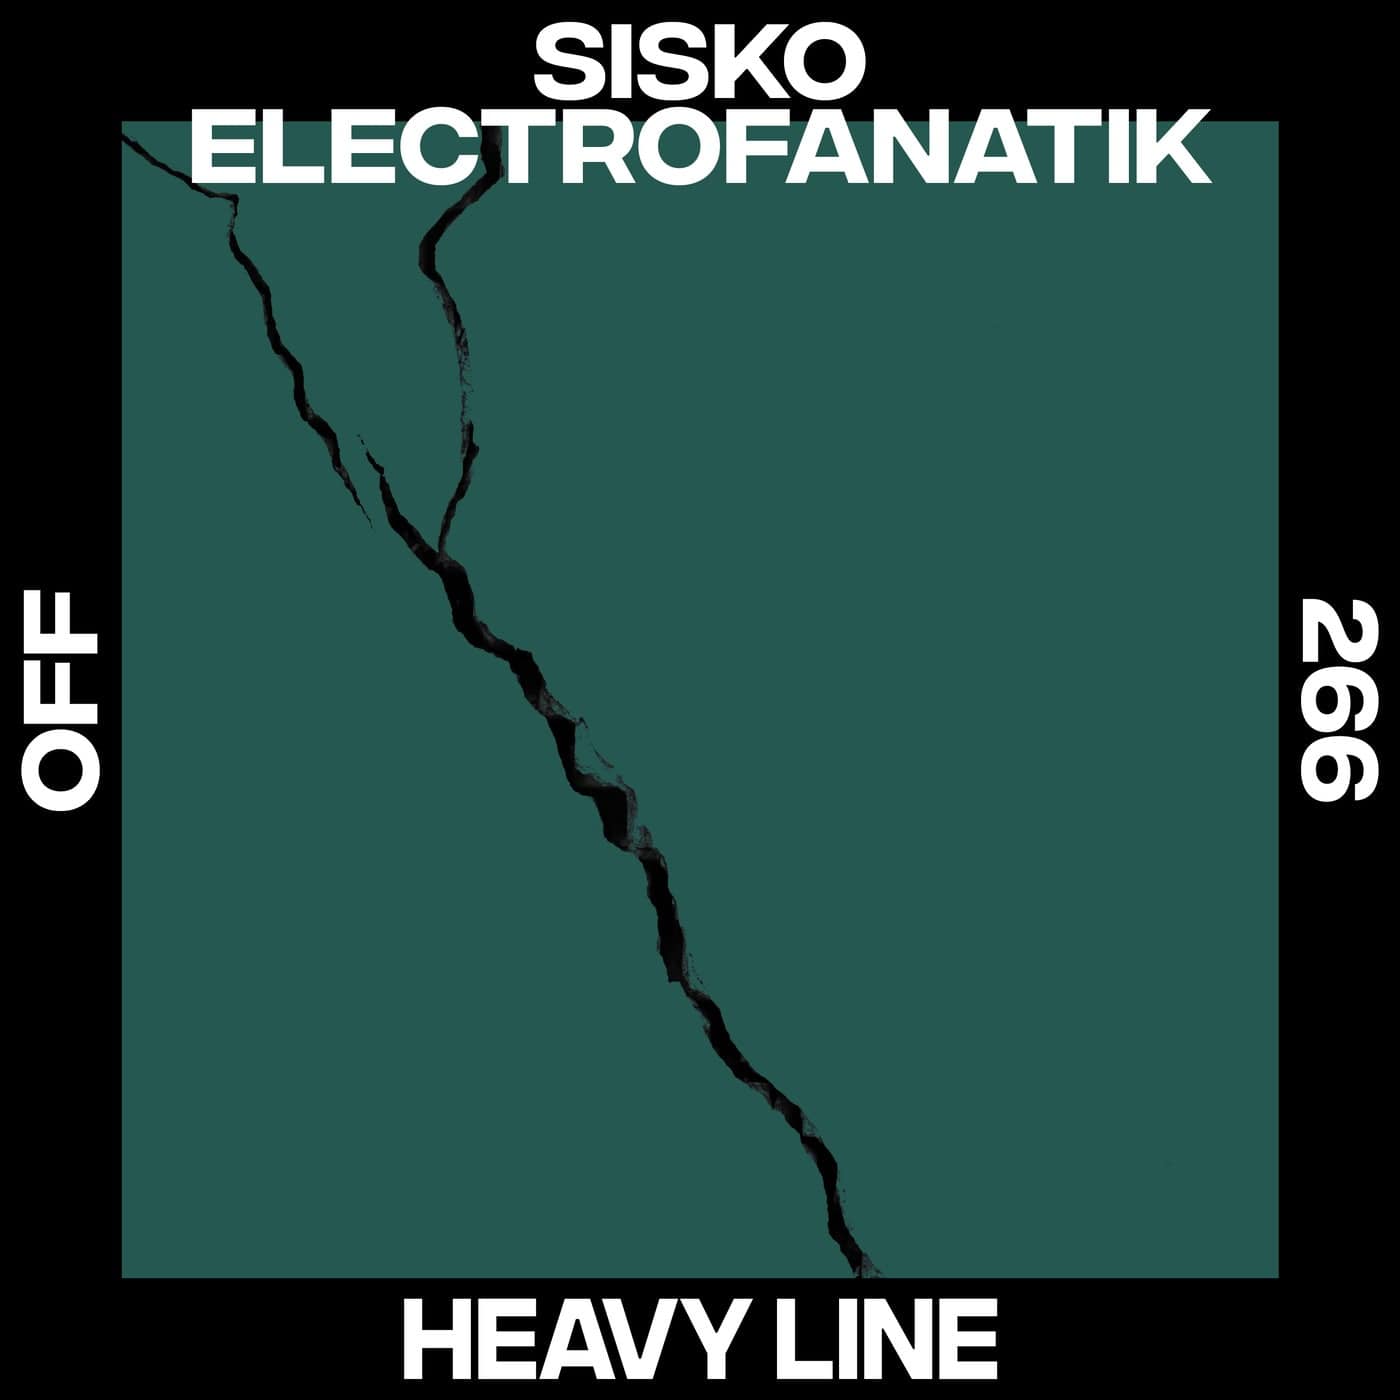 Download Sisko Electrofanatik - Heavy Line on Electrobuzz